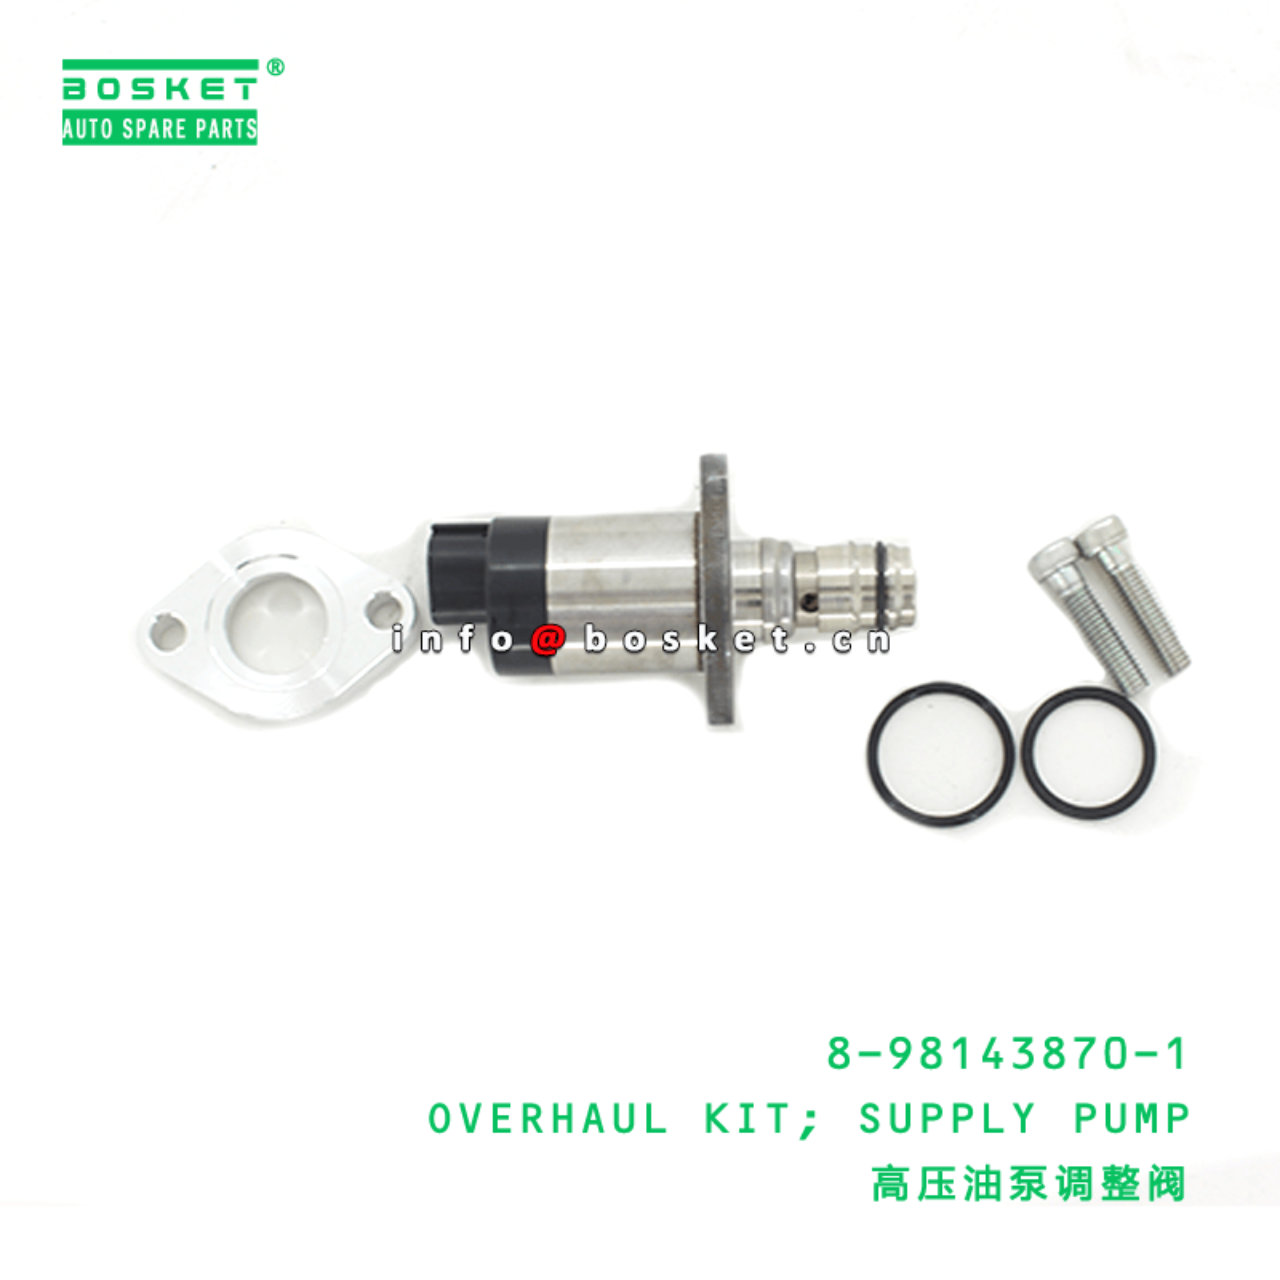 8-98143870-1 Supply Pump Overhaul Kit 8981438701 Suitable for ISUZU ELF 4HK1